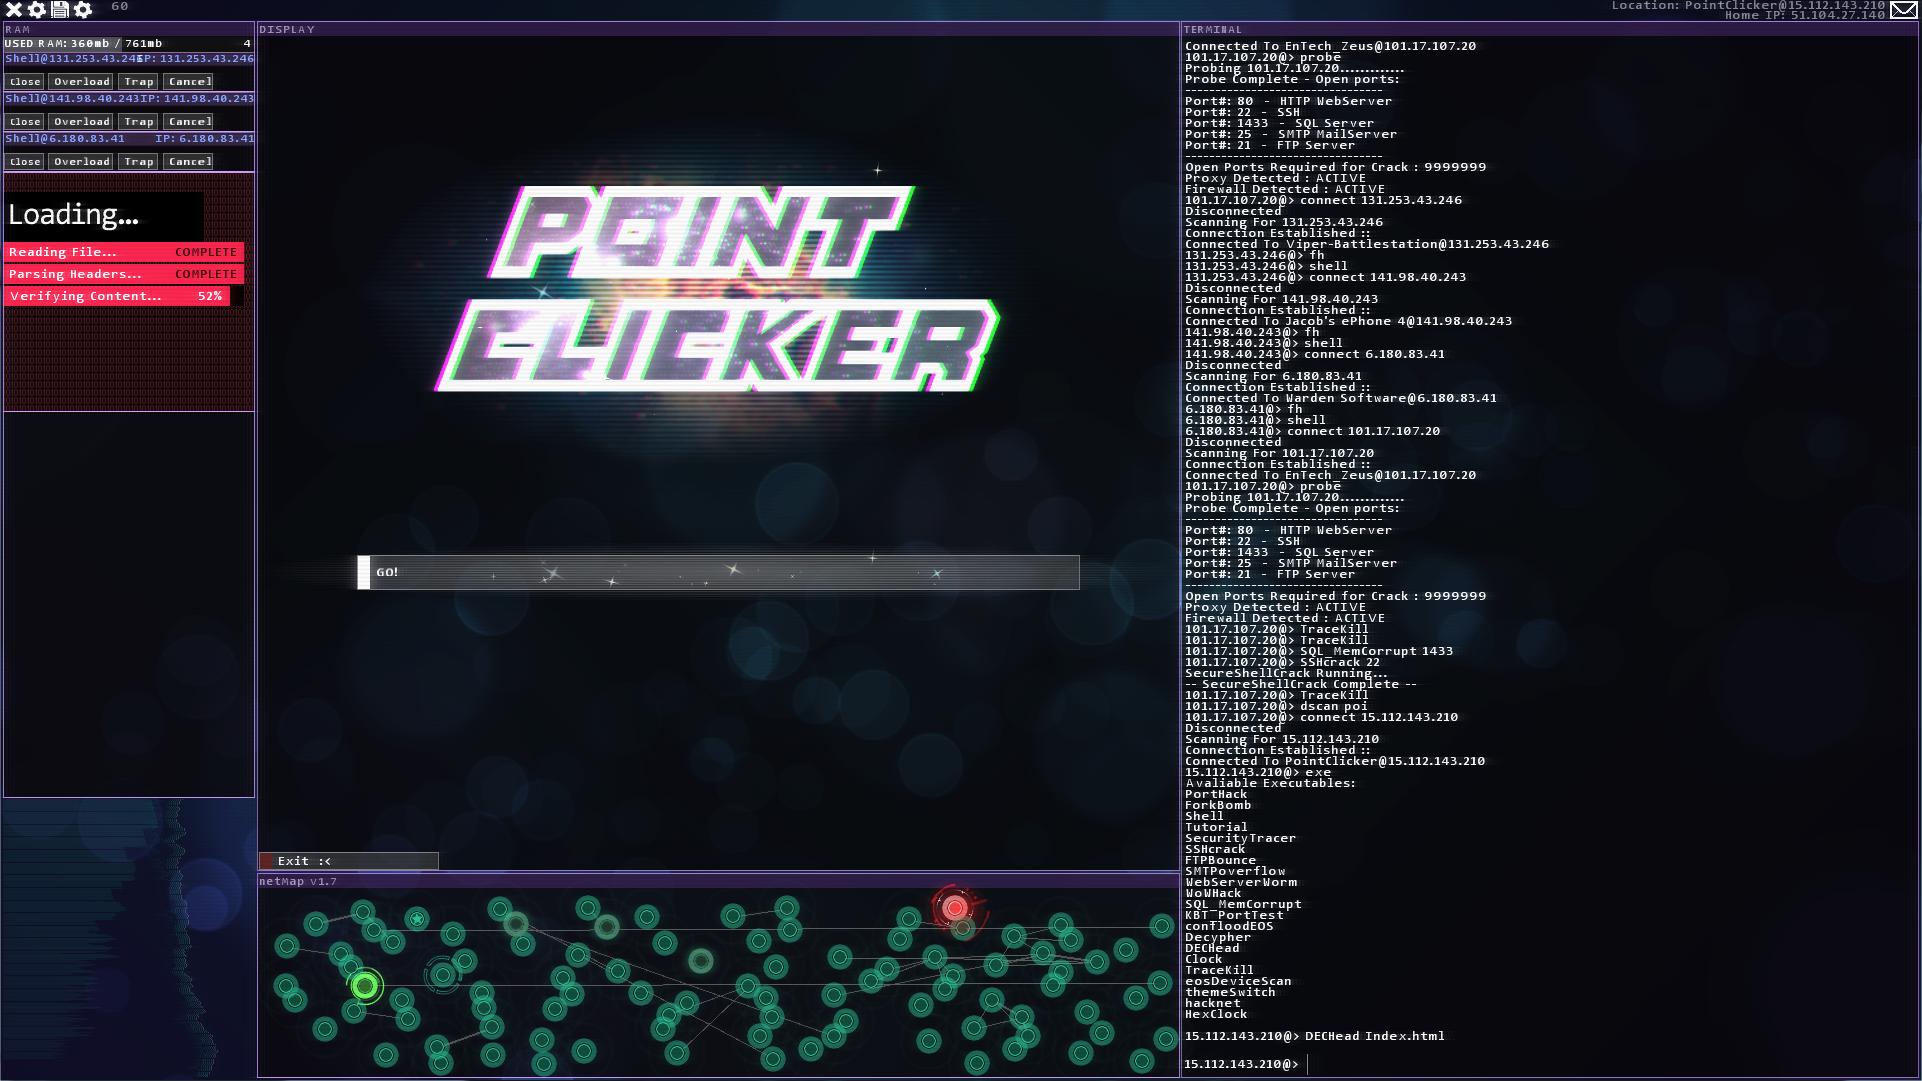 Hacknet Official Soundtrack screenshot